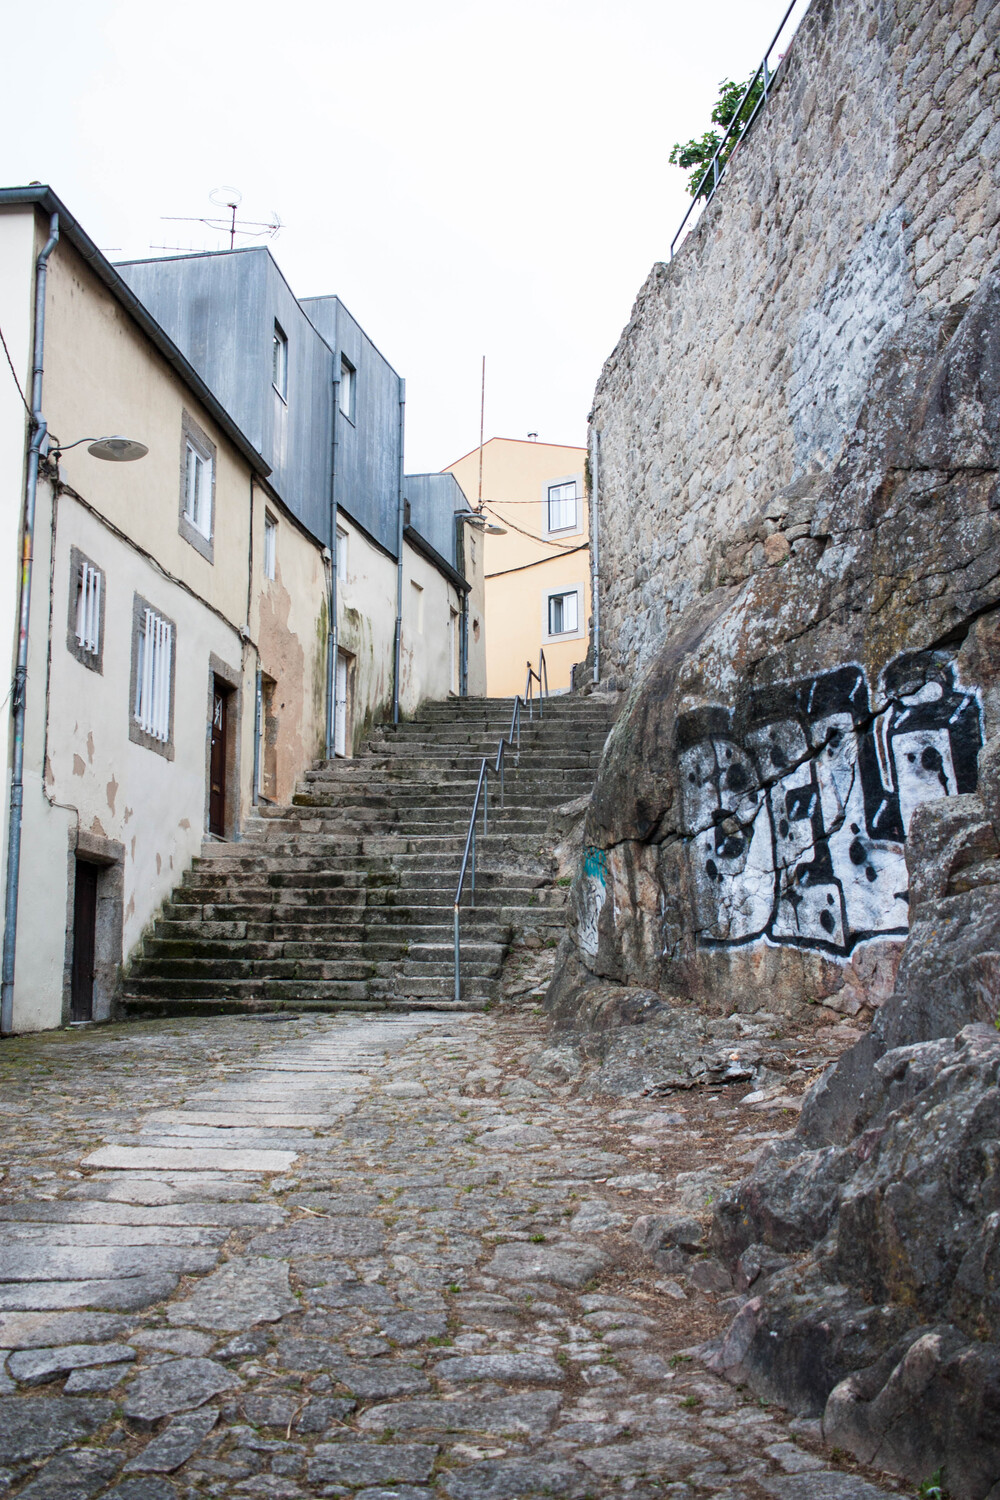 Ribiera (Porto) stone walls and staircase.